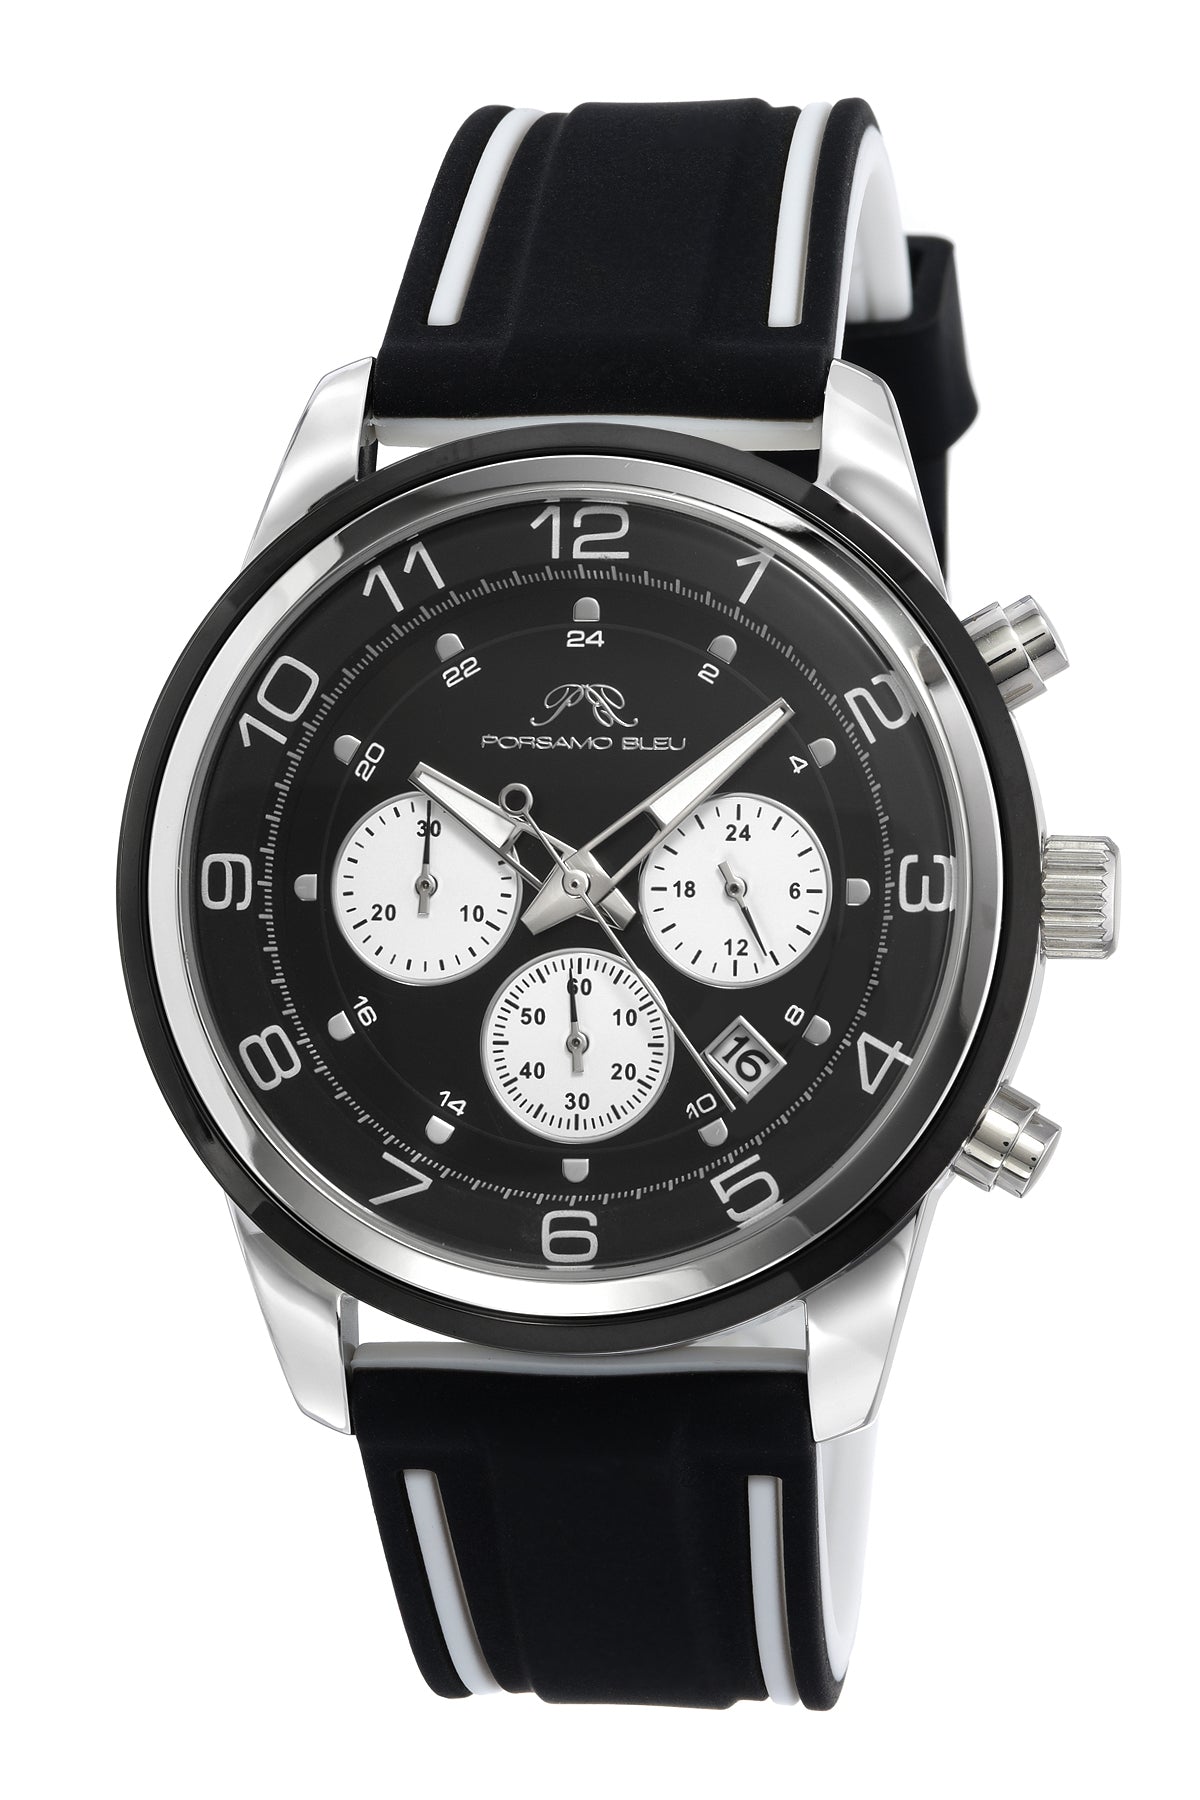 Porsamo Bleu Arthur Luxury Chronograph Men's Silicone Strap Watch, Silver, Black 1092AARR